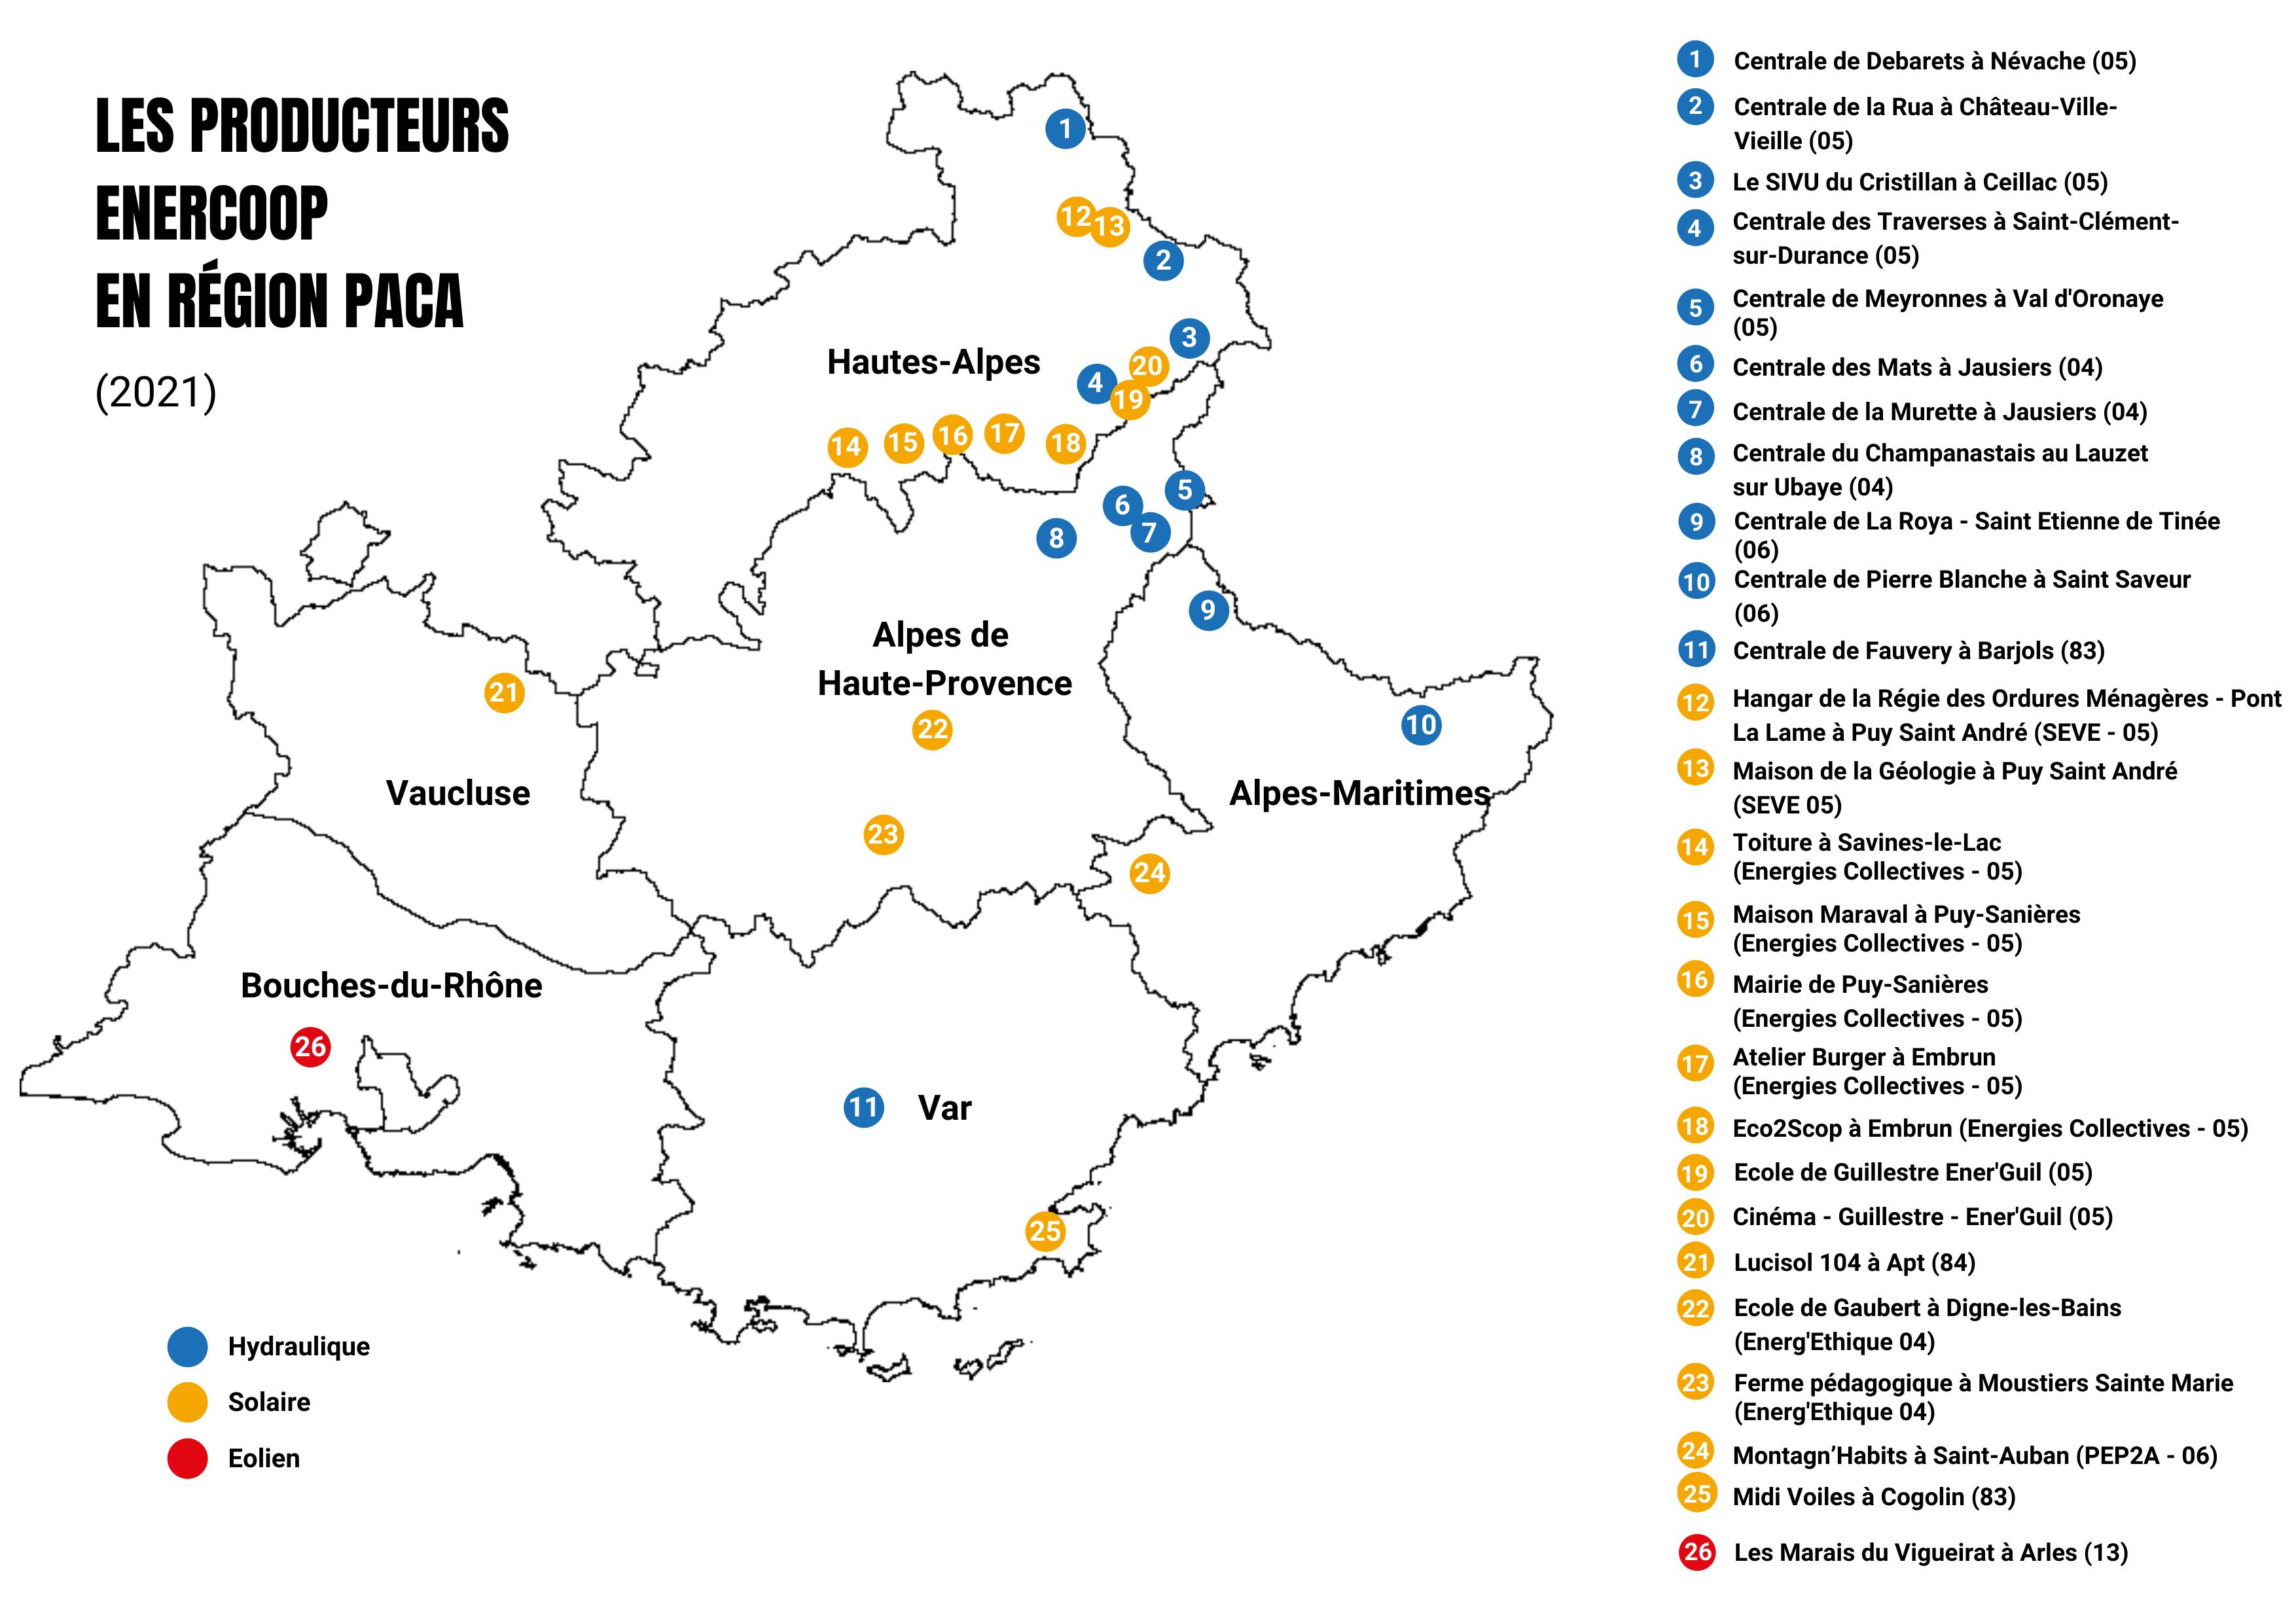 Enercoop Paca - Carte des producteurs 2021 